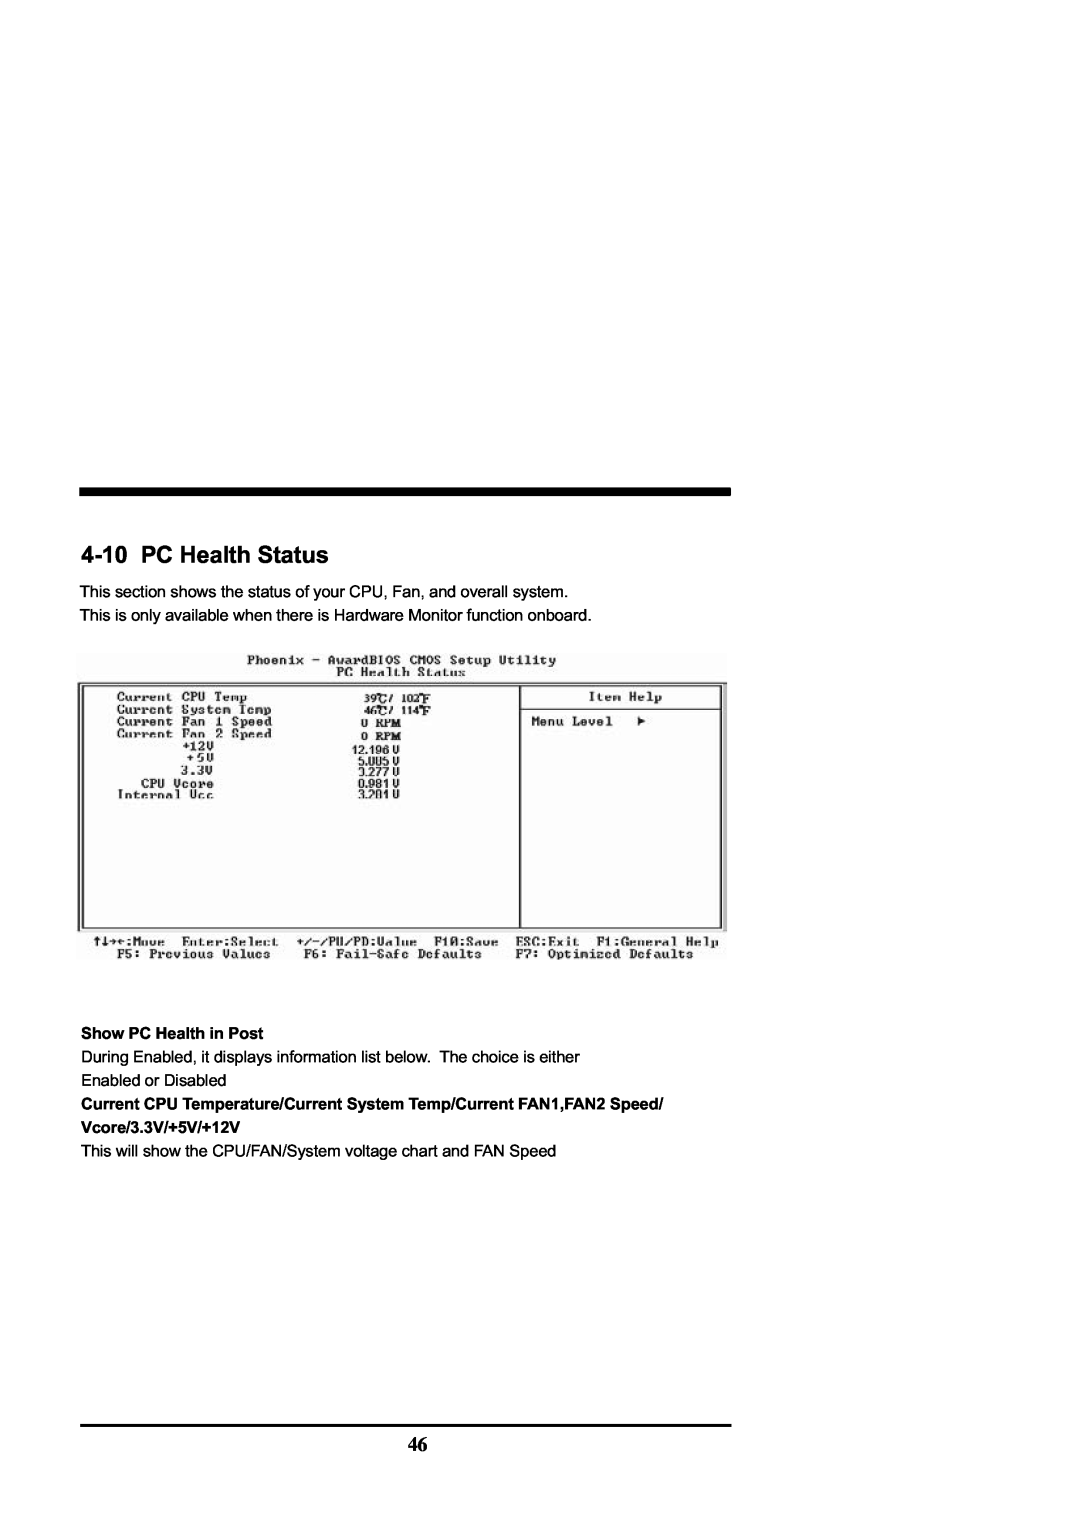 Intel CV702A, CV700A manual 4-10PC Health Status, Show PC Health in Post, Vcore/3.3V/+5V/+12V 